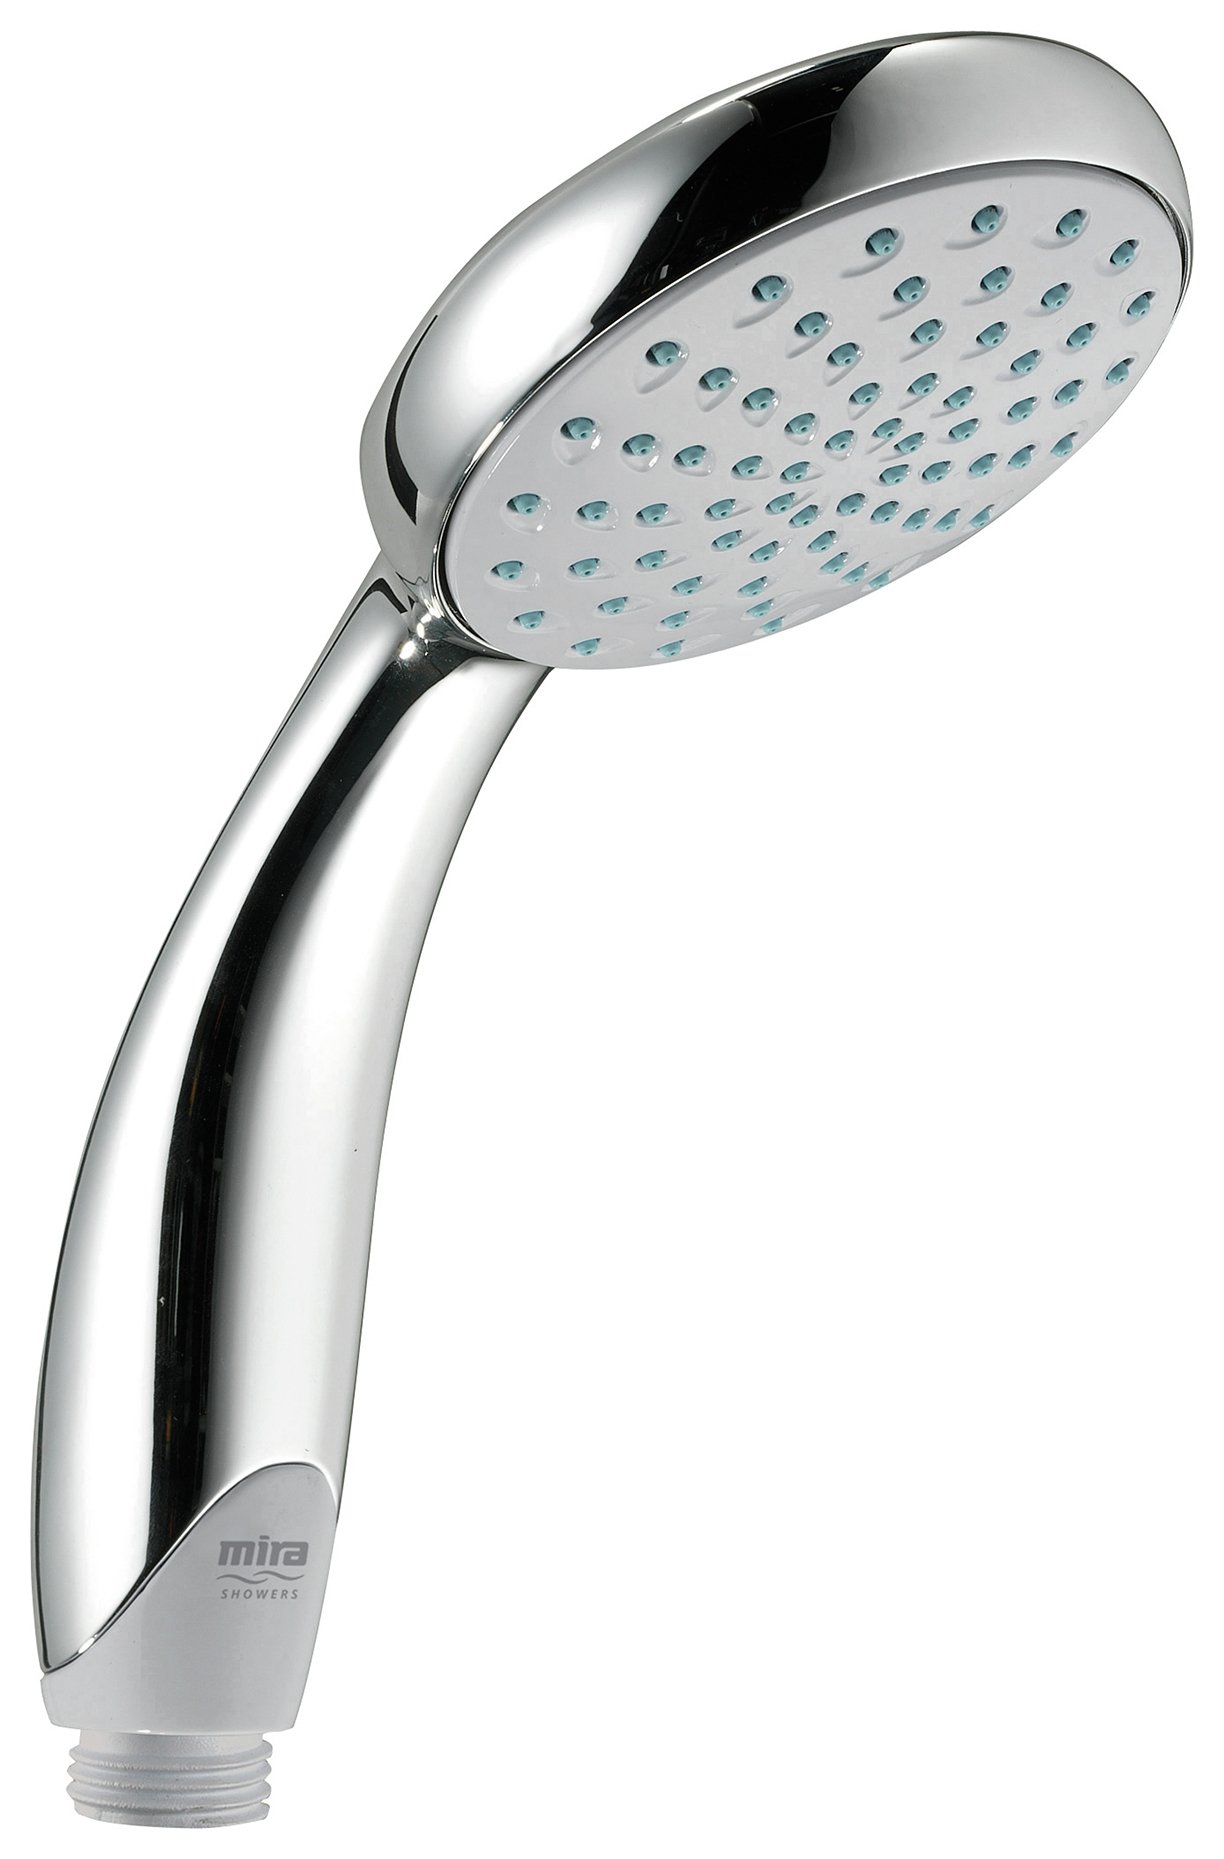 Mira Nectar Single Spray 9cm Shower Head review